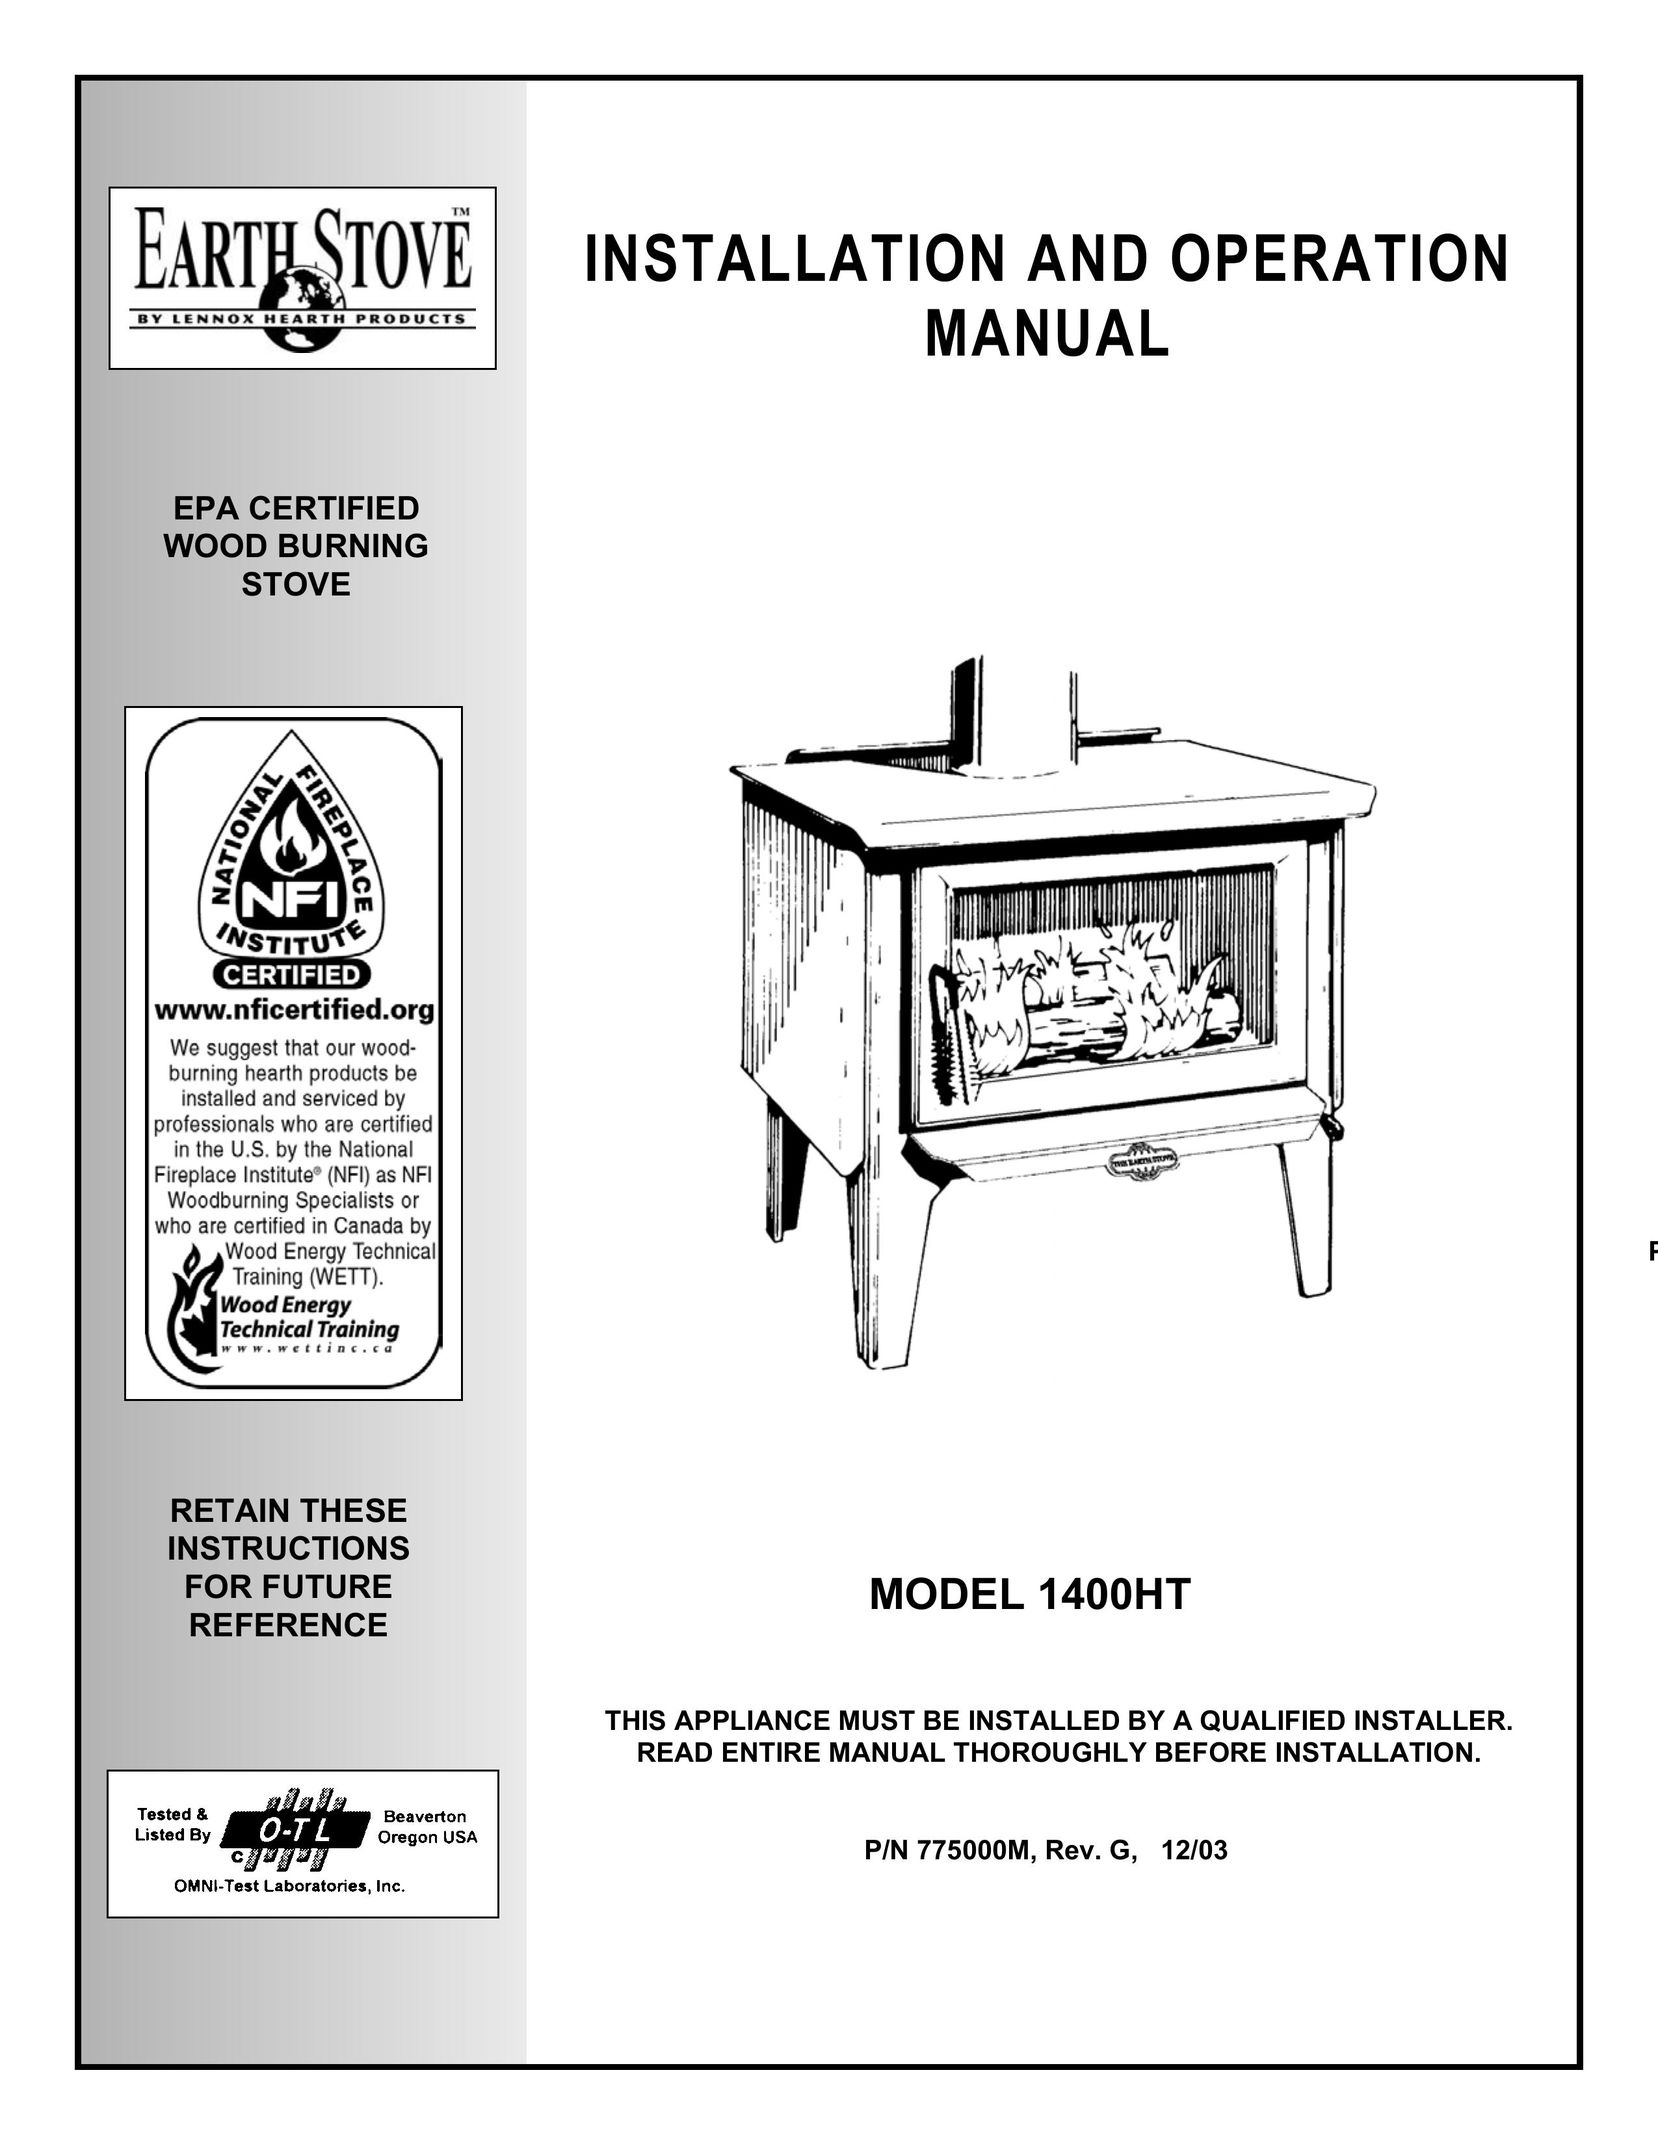 LG Electronics 1400HT Stove User Manual